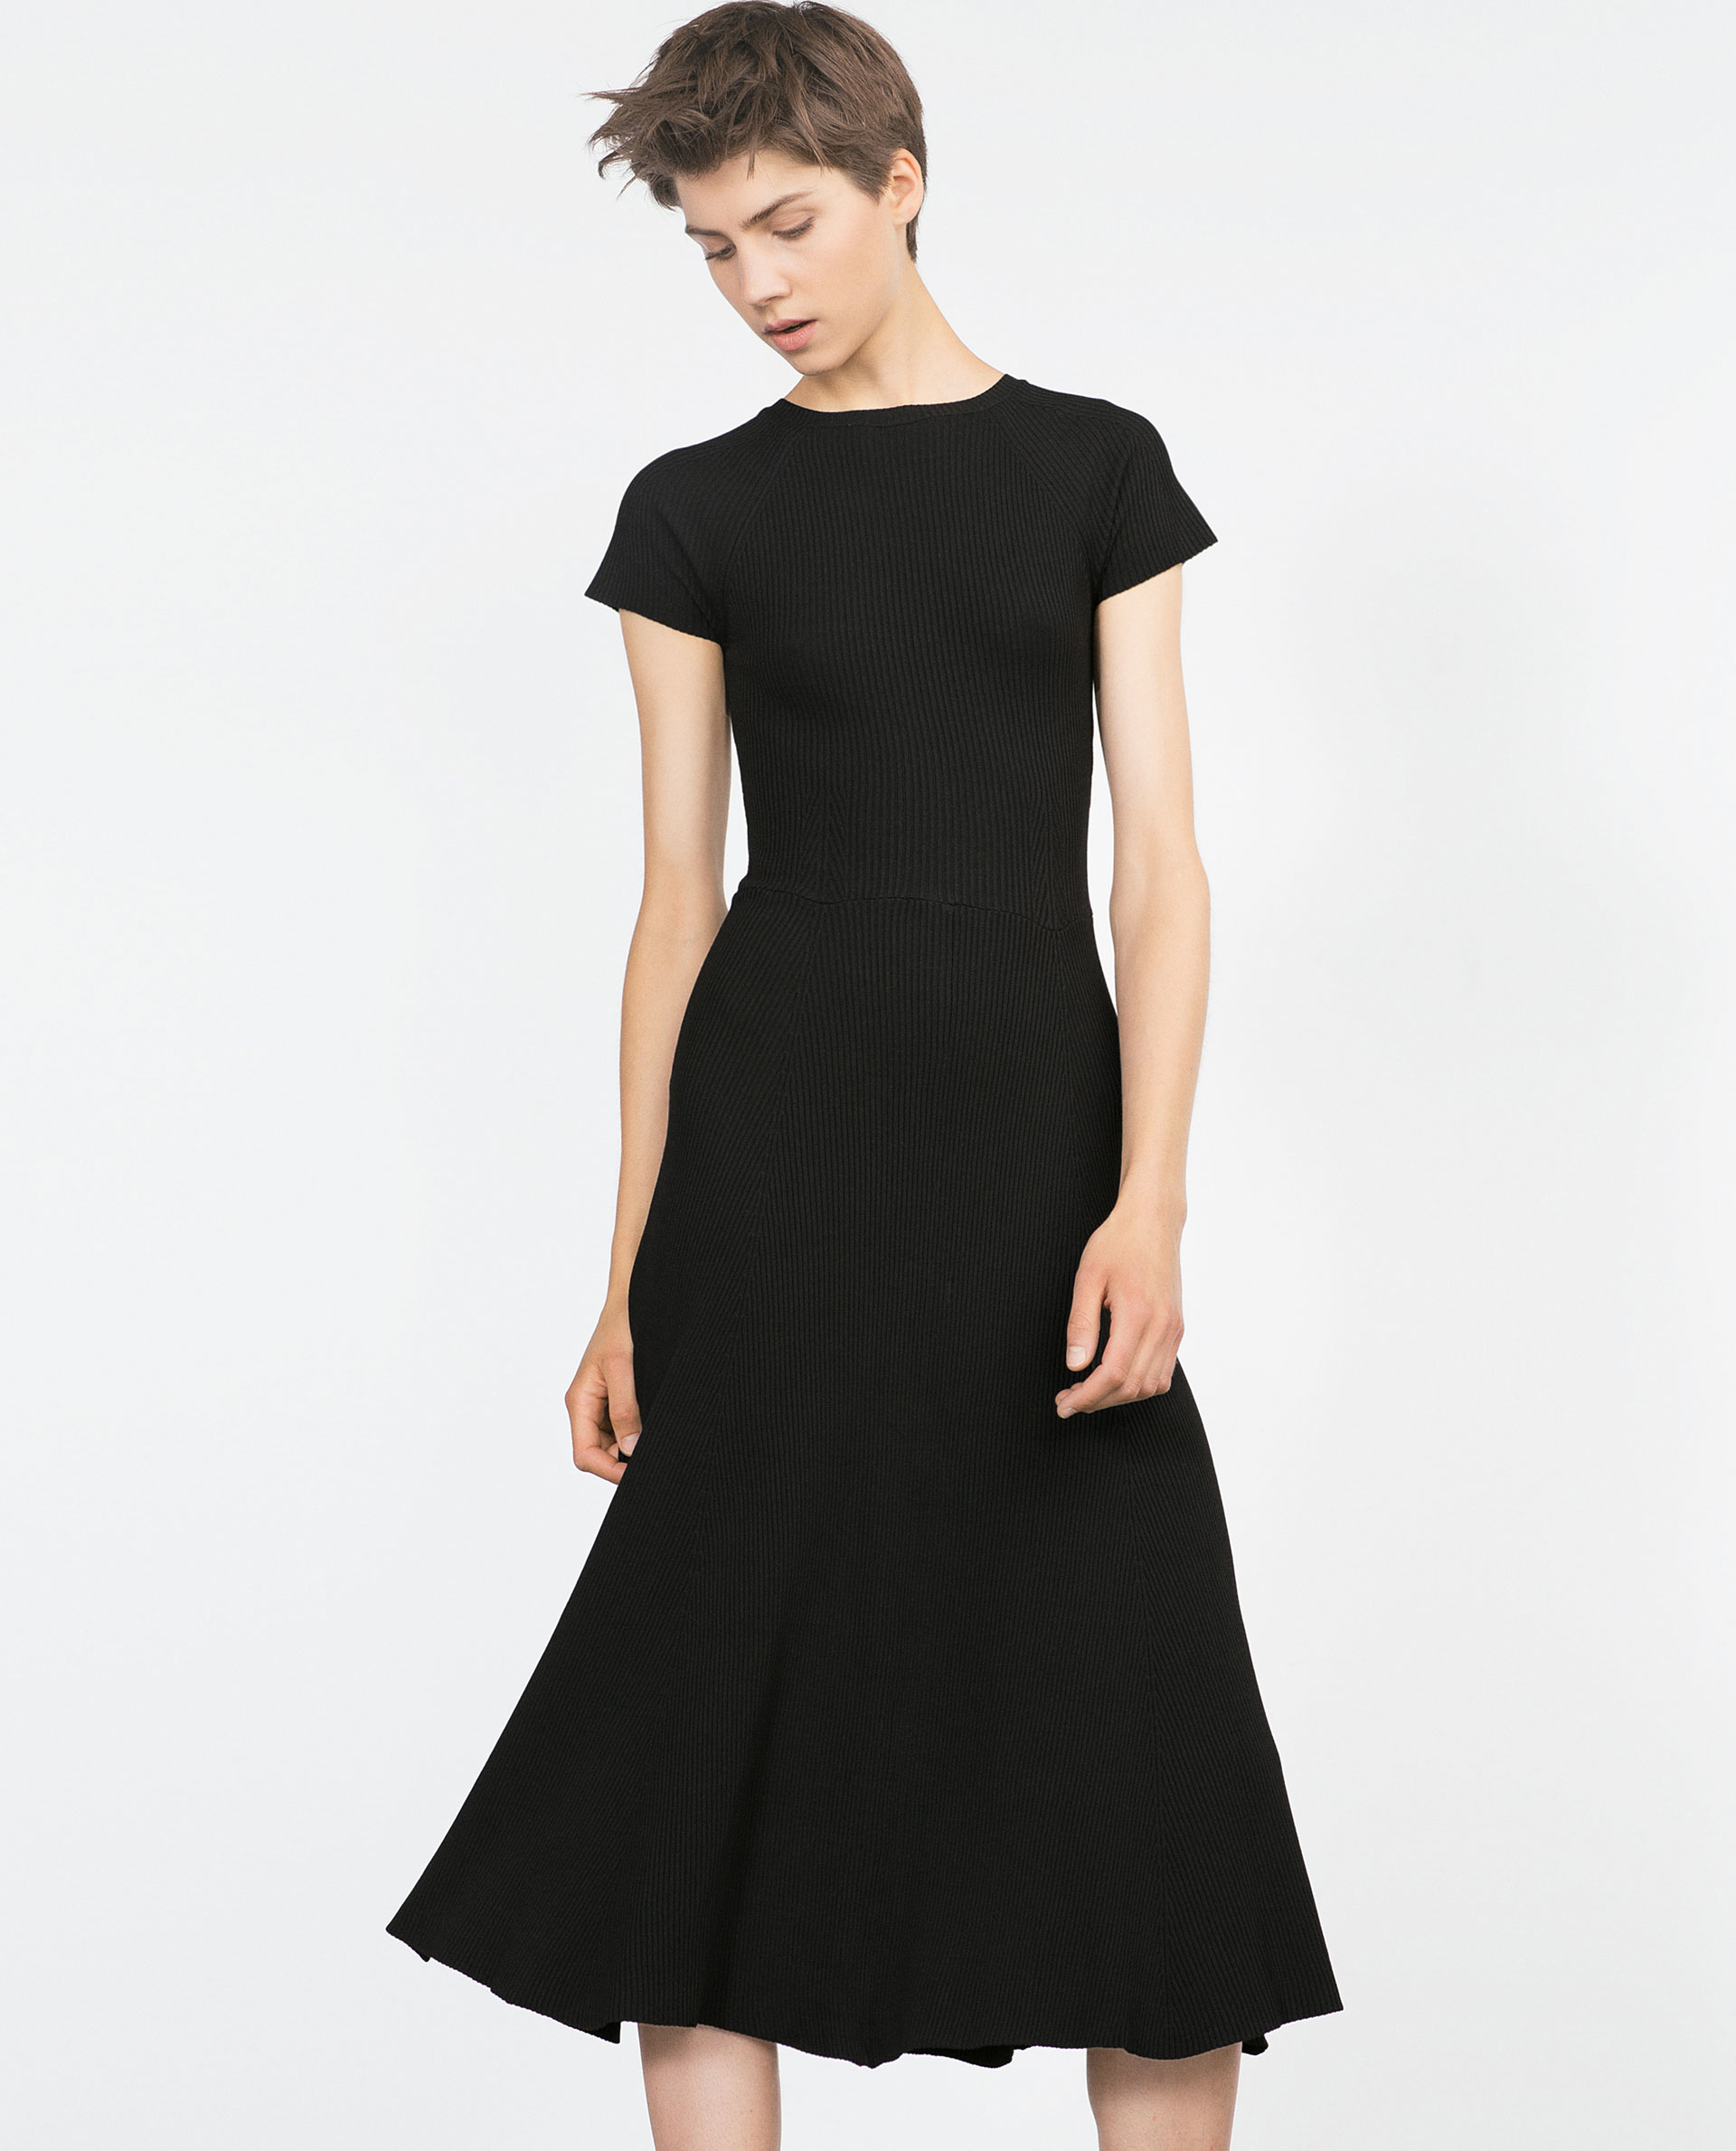 Zara Black Short Sleeve Dress